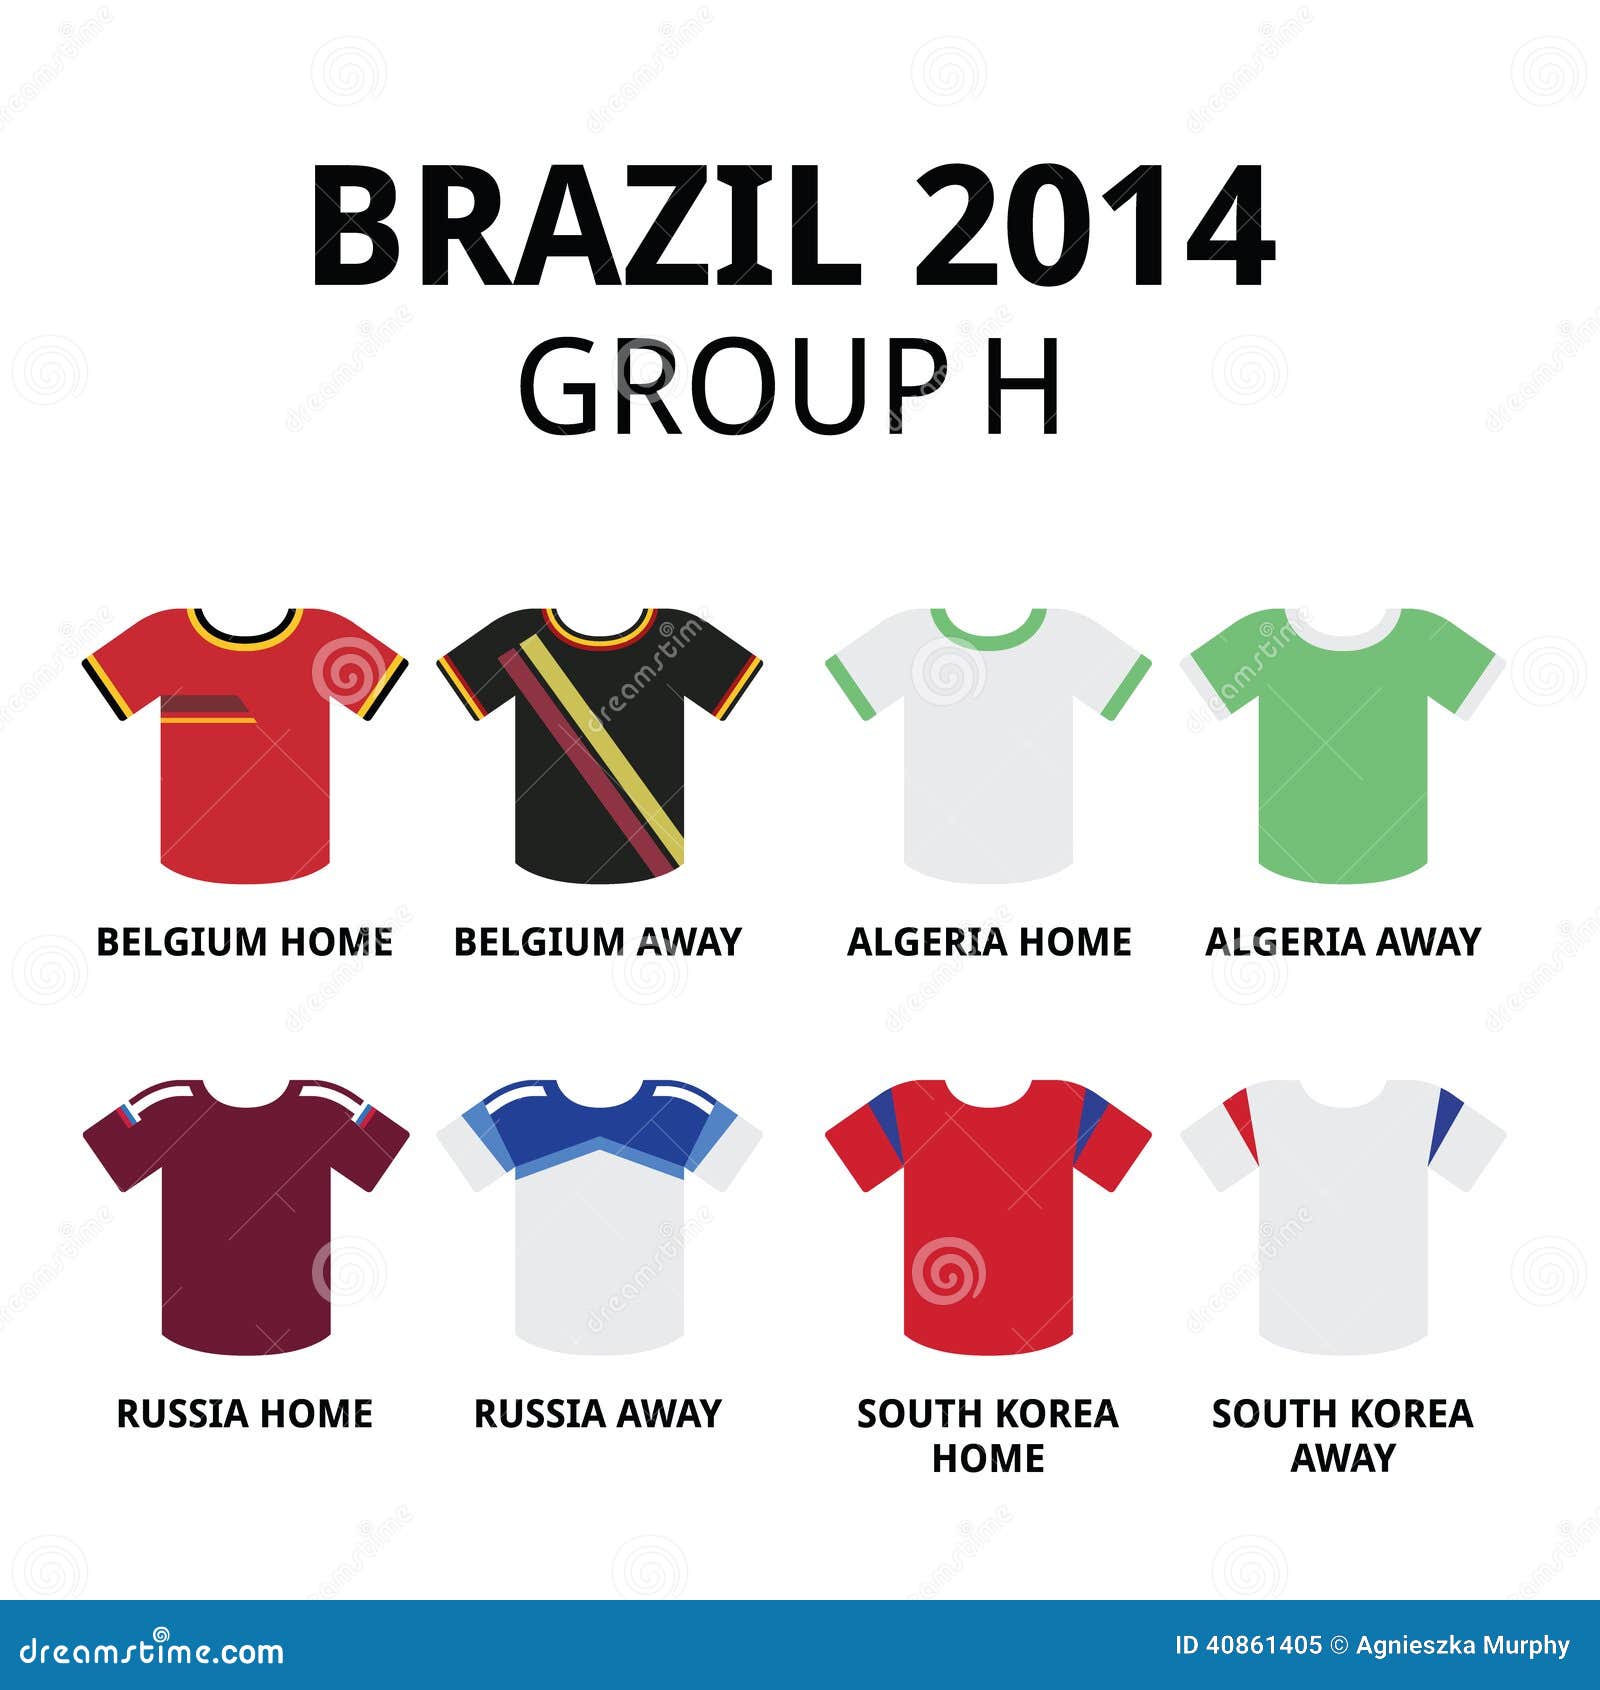 brazilian football teams shirts